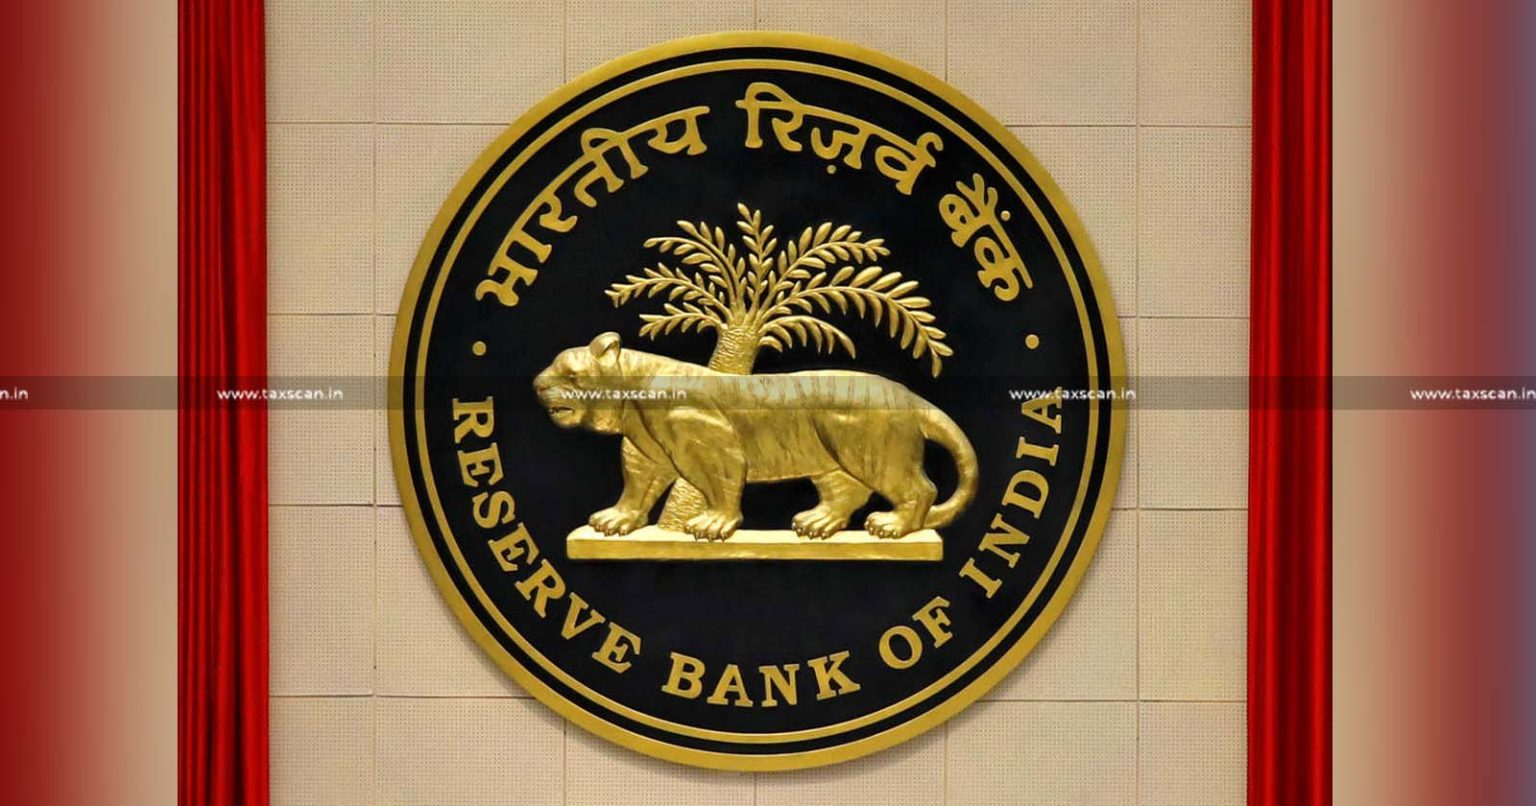 RBI Cancels Banking License of Karnataka based - Mahalaxmi Co-operative Bank Ltd - function as Non-Banking Institution - TAXSCAN